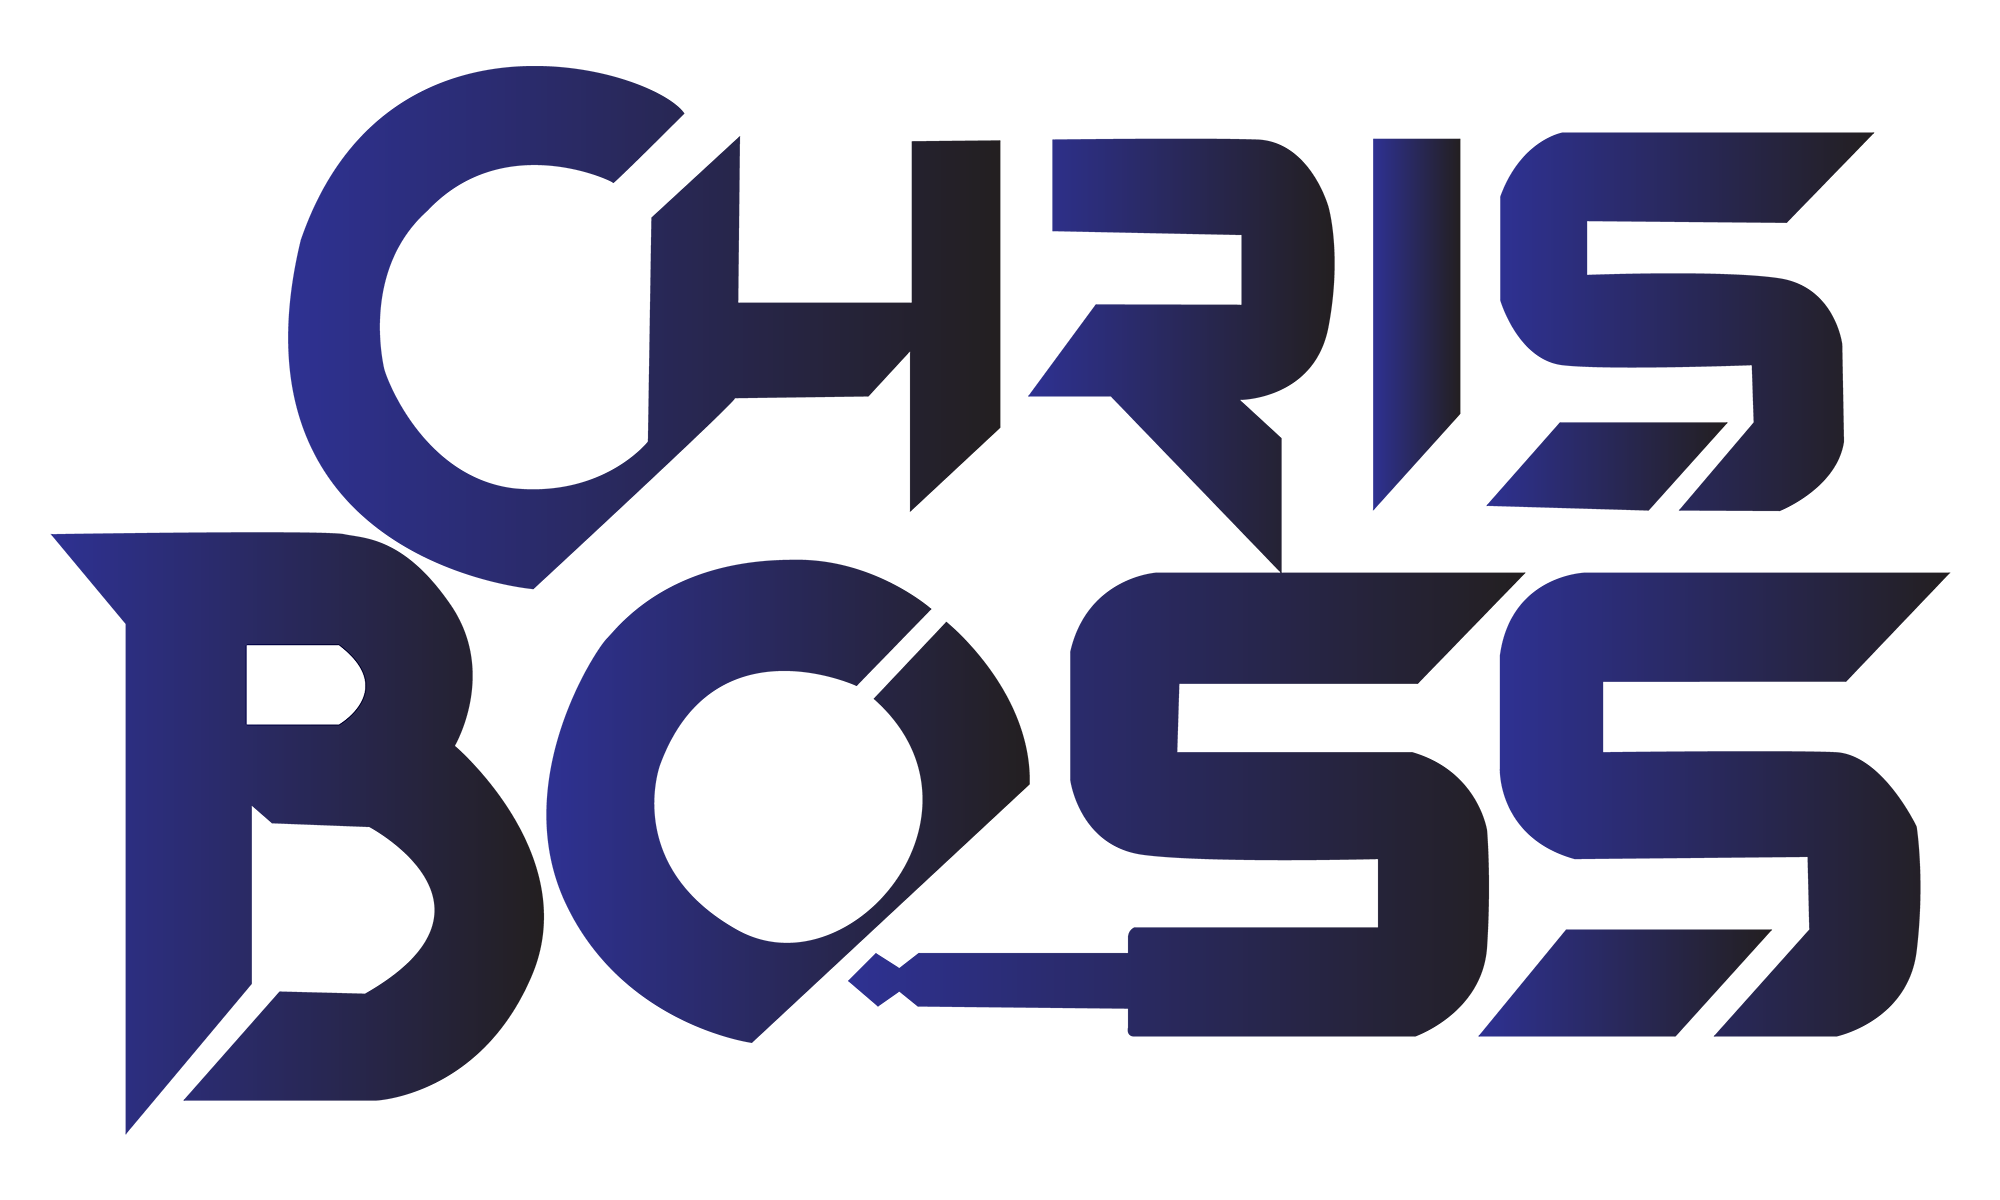 Chris Boss